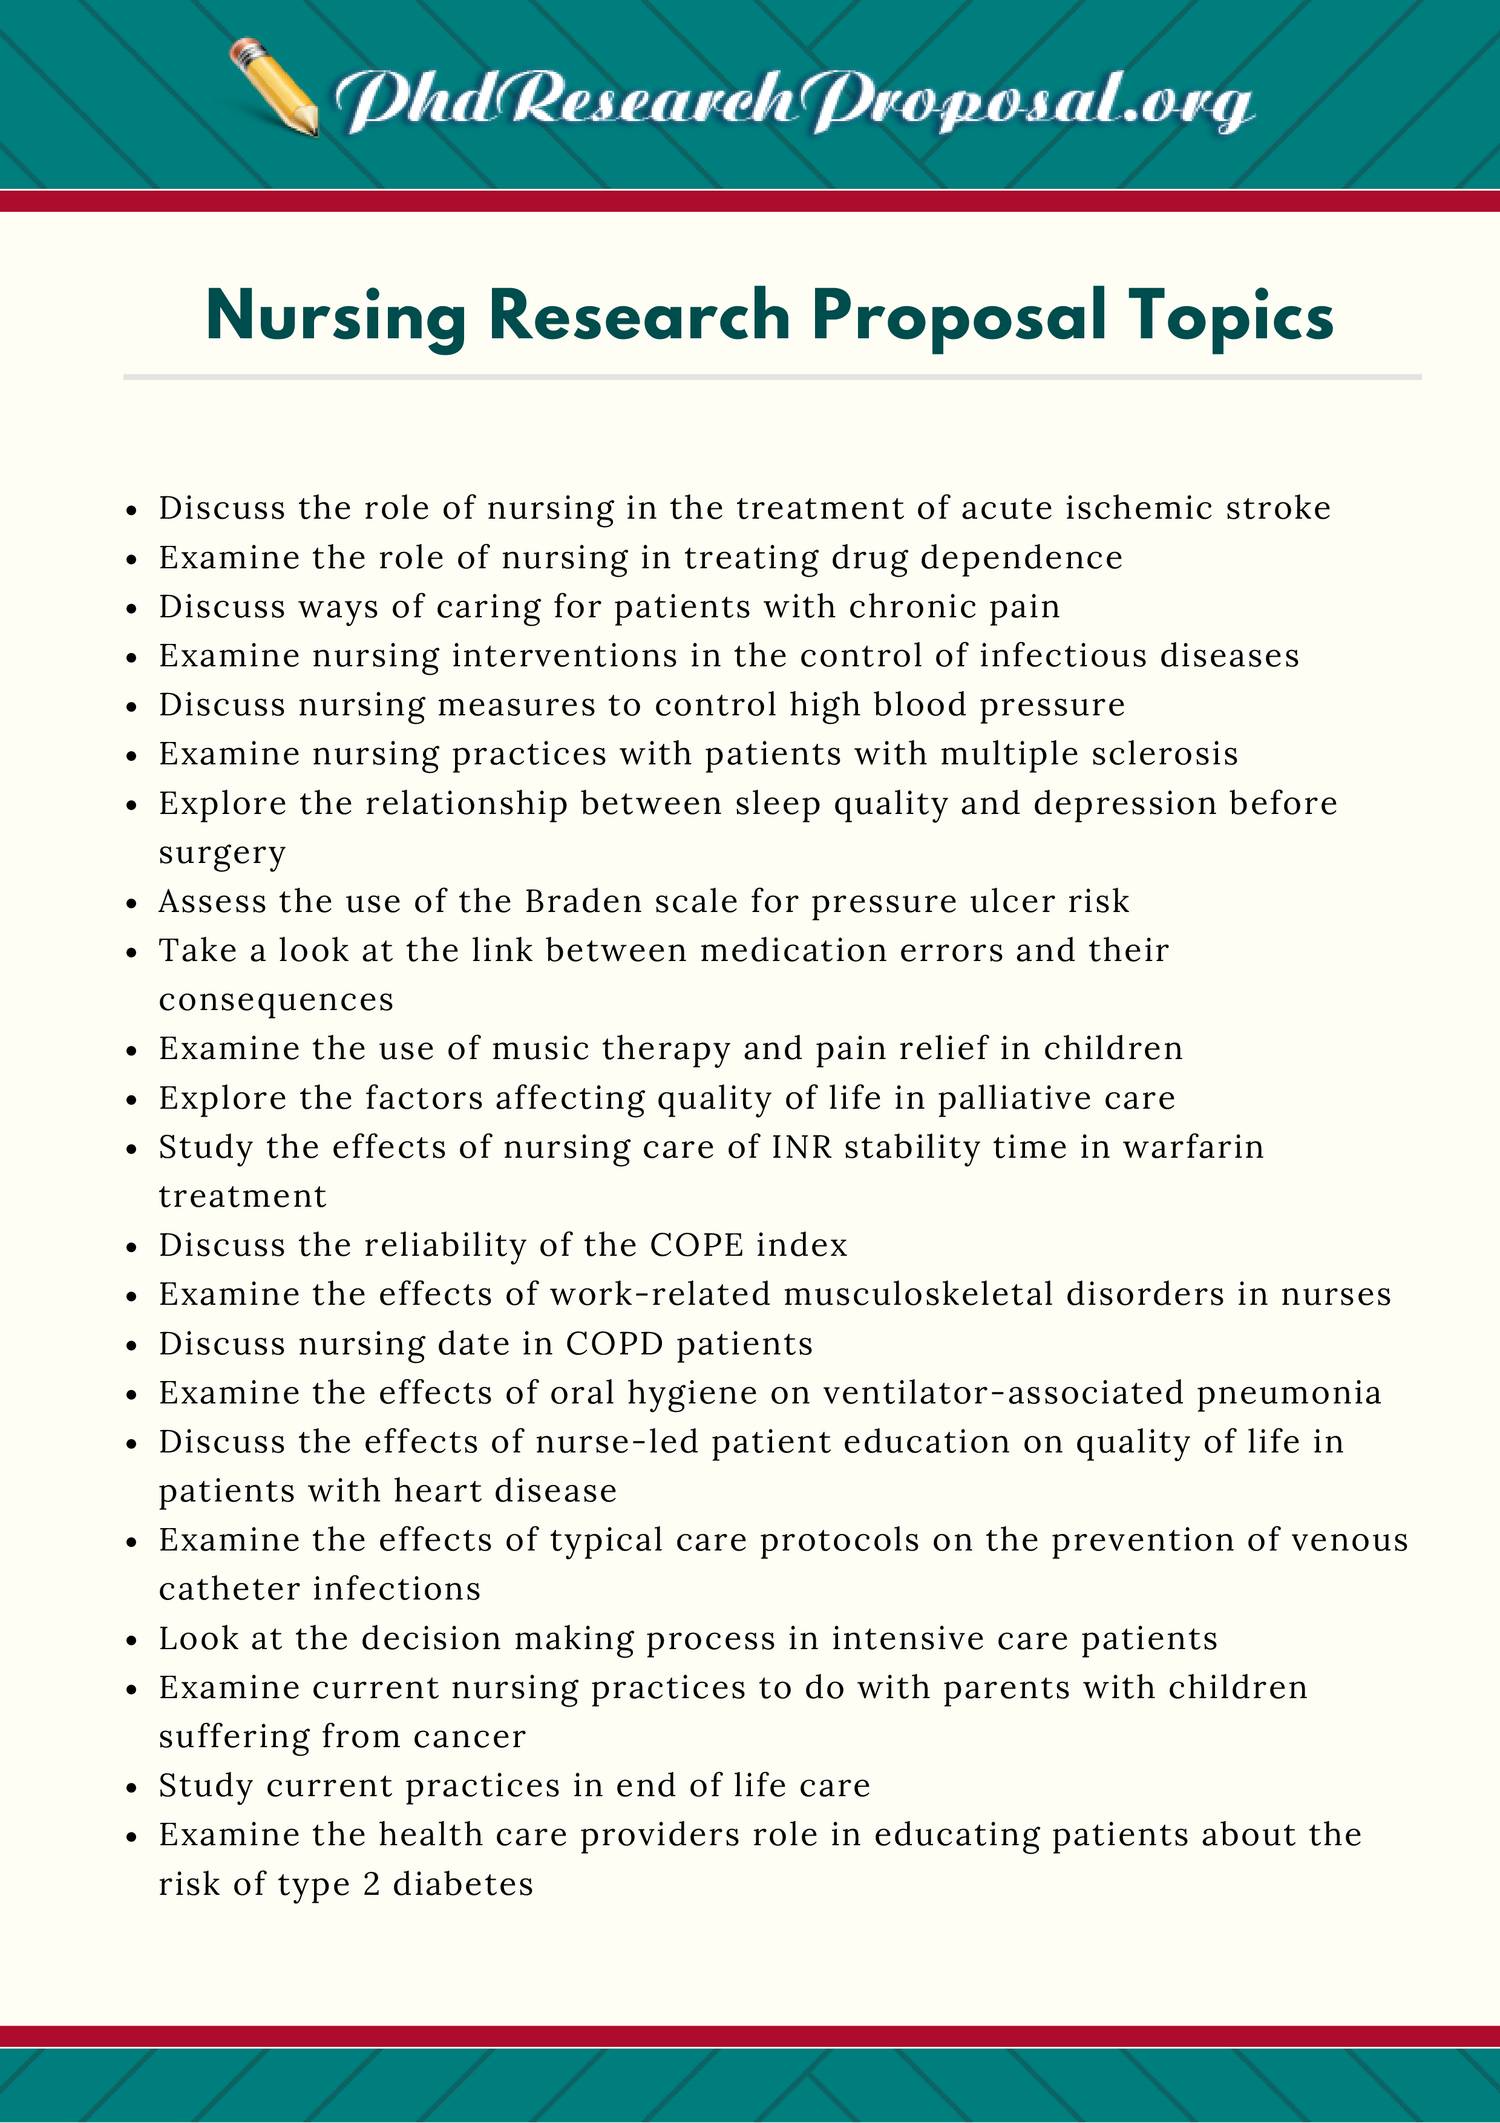 descriptive research topics for nursing students